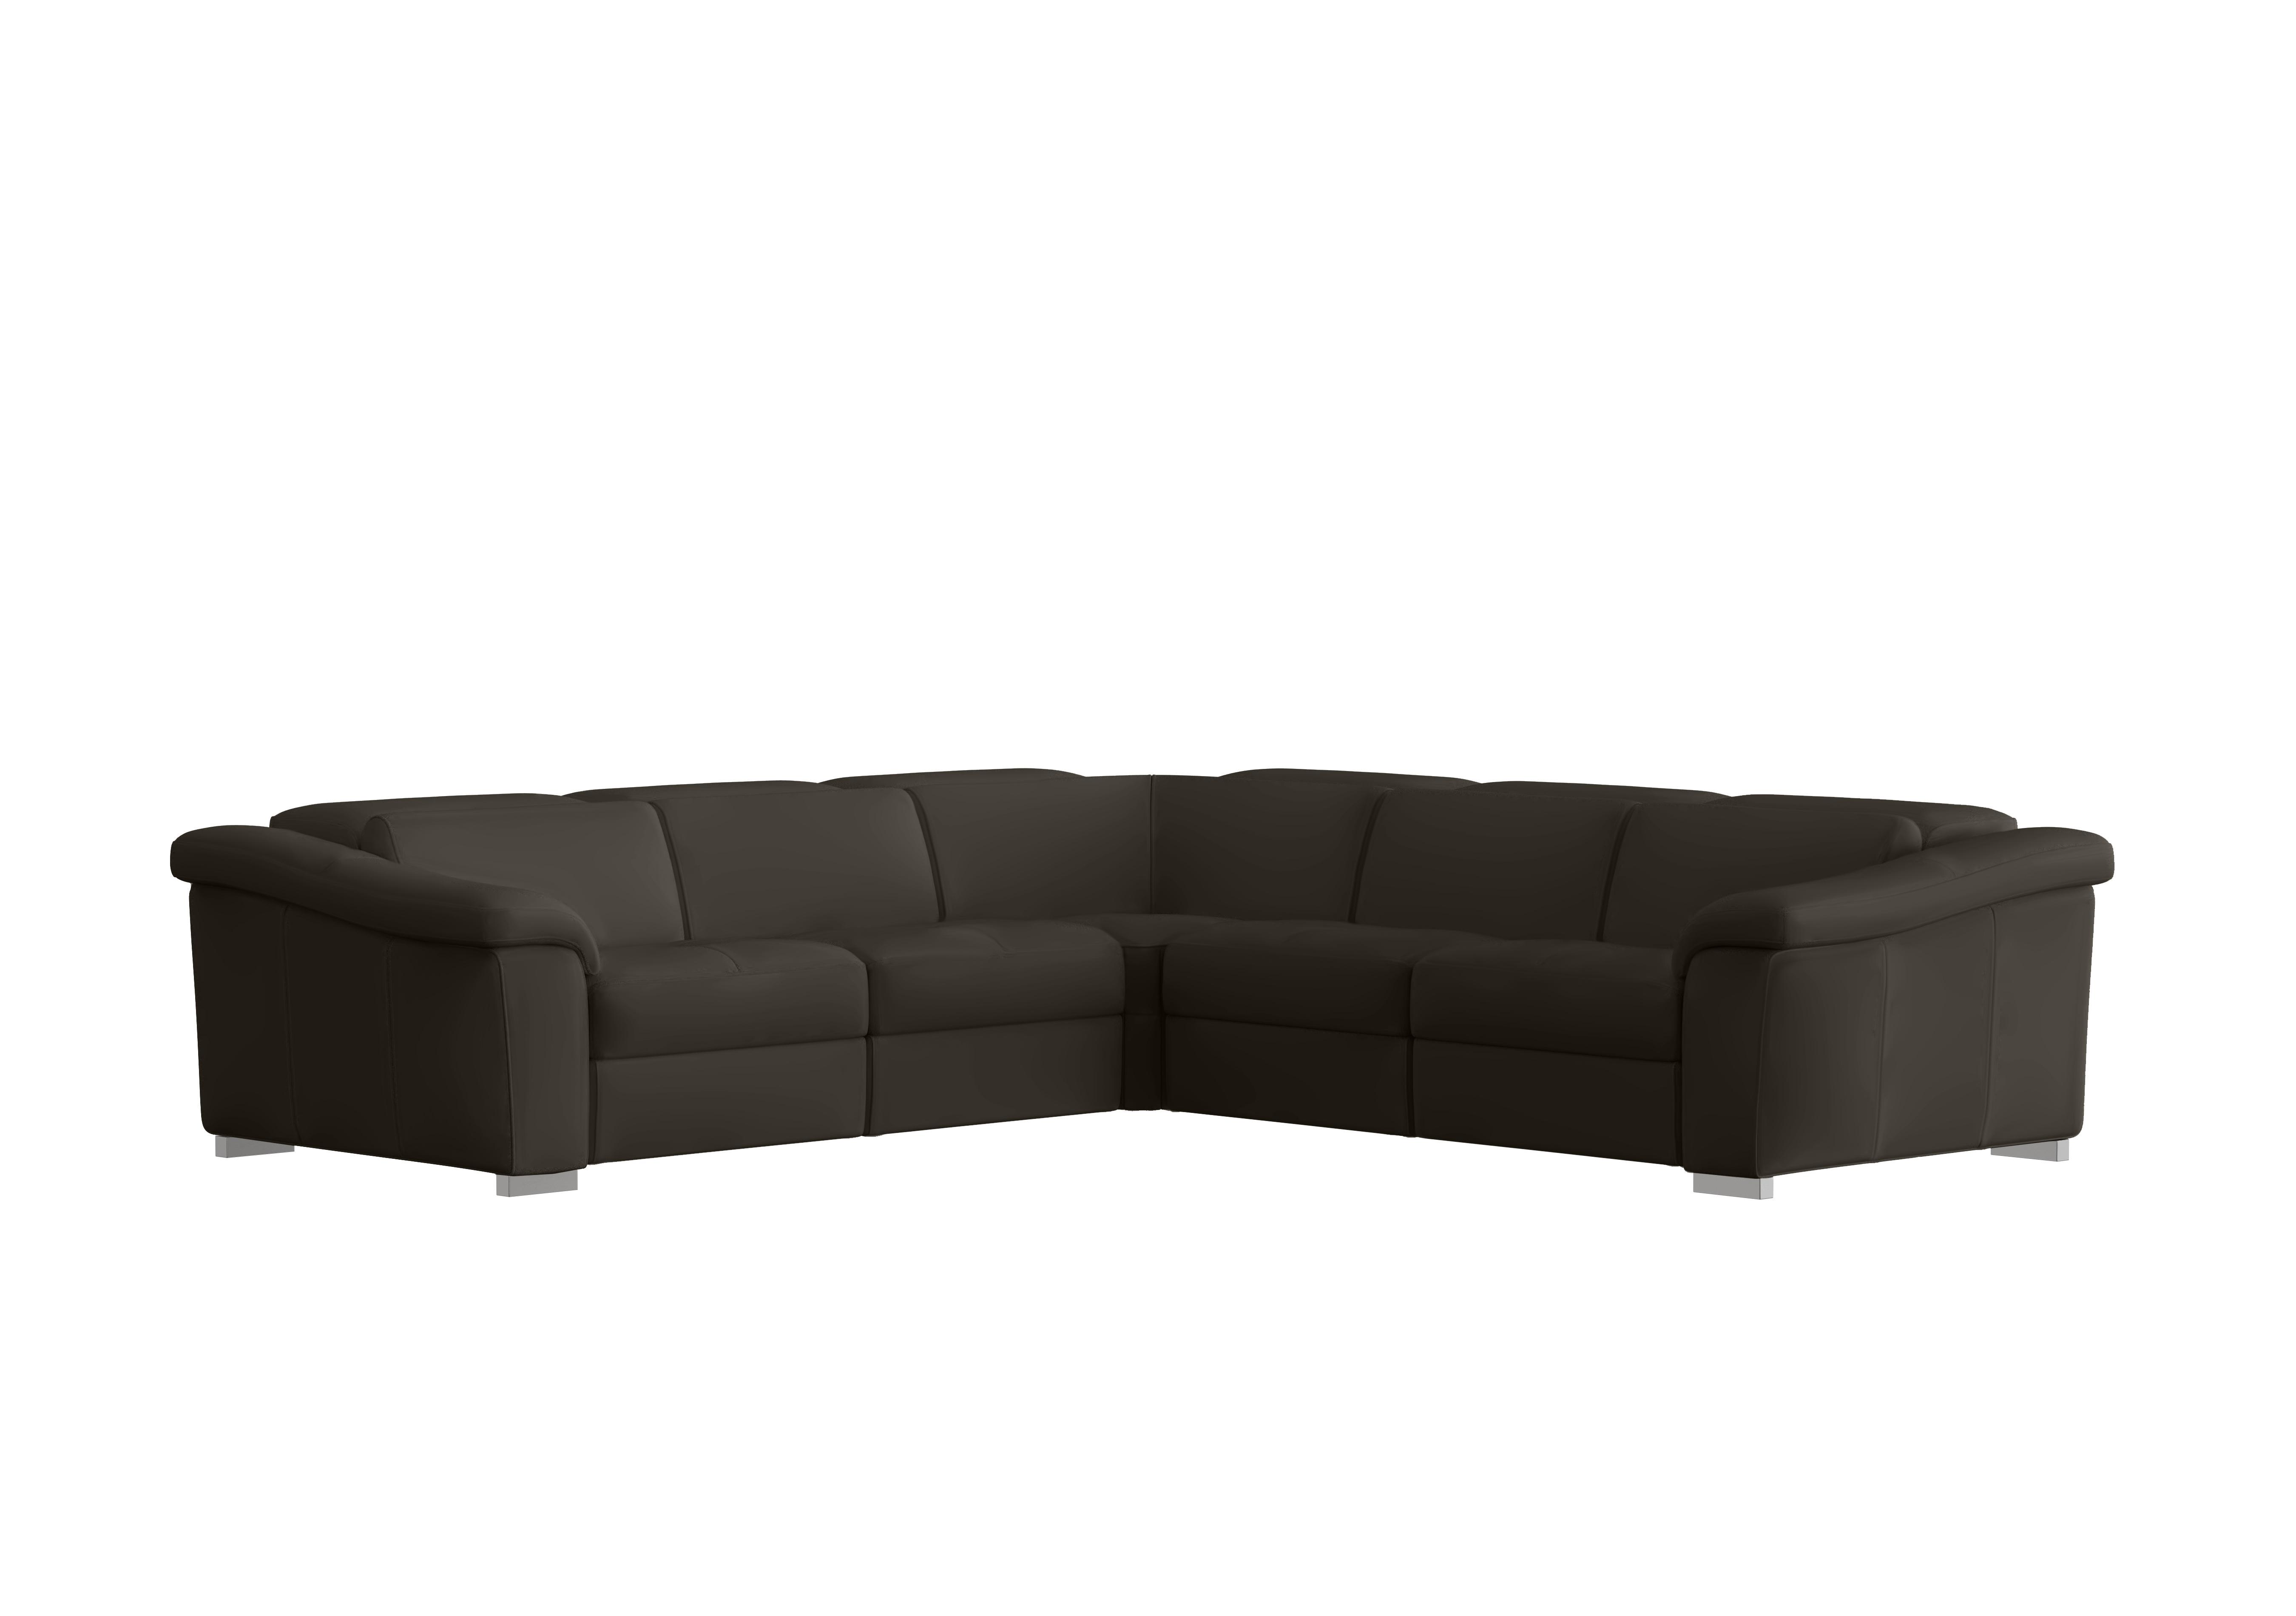 Galileo Leather Large Corner Sofa in Torello Chocolate 91 Ch on Furniture Village